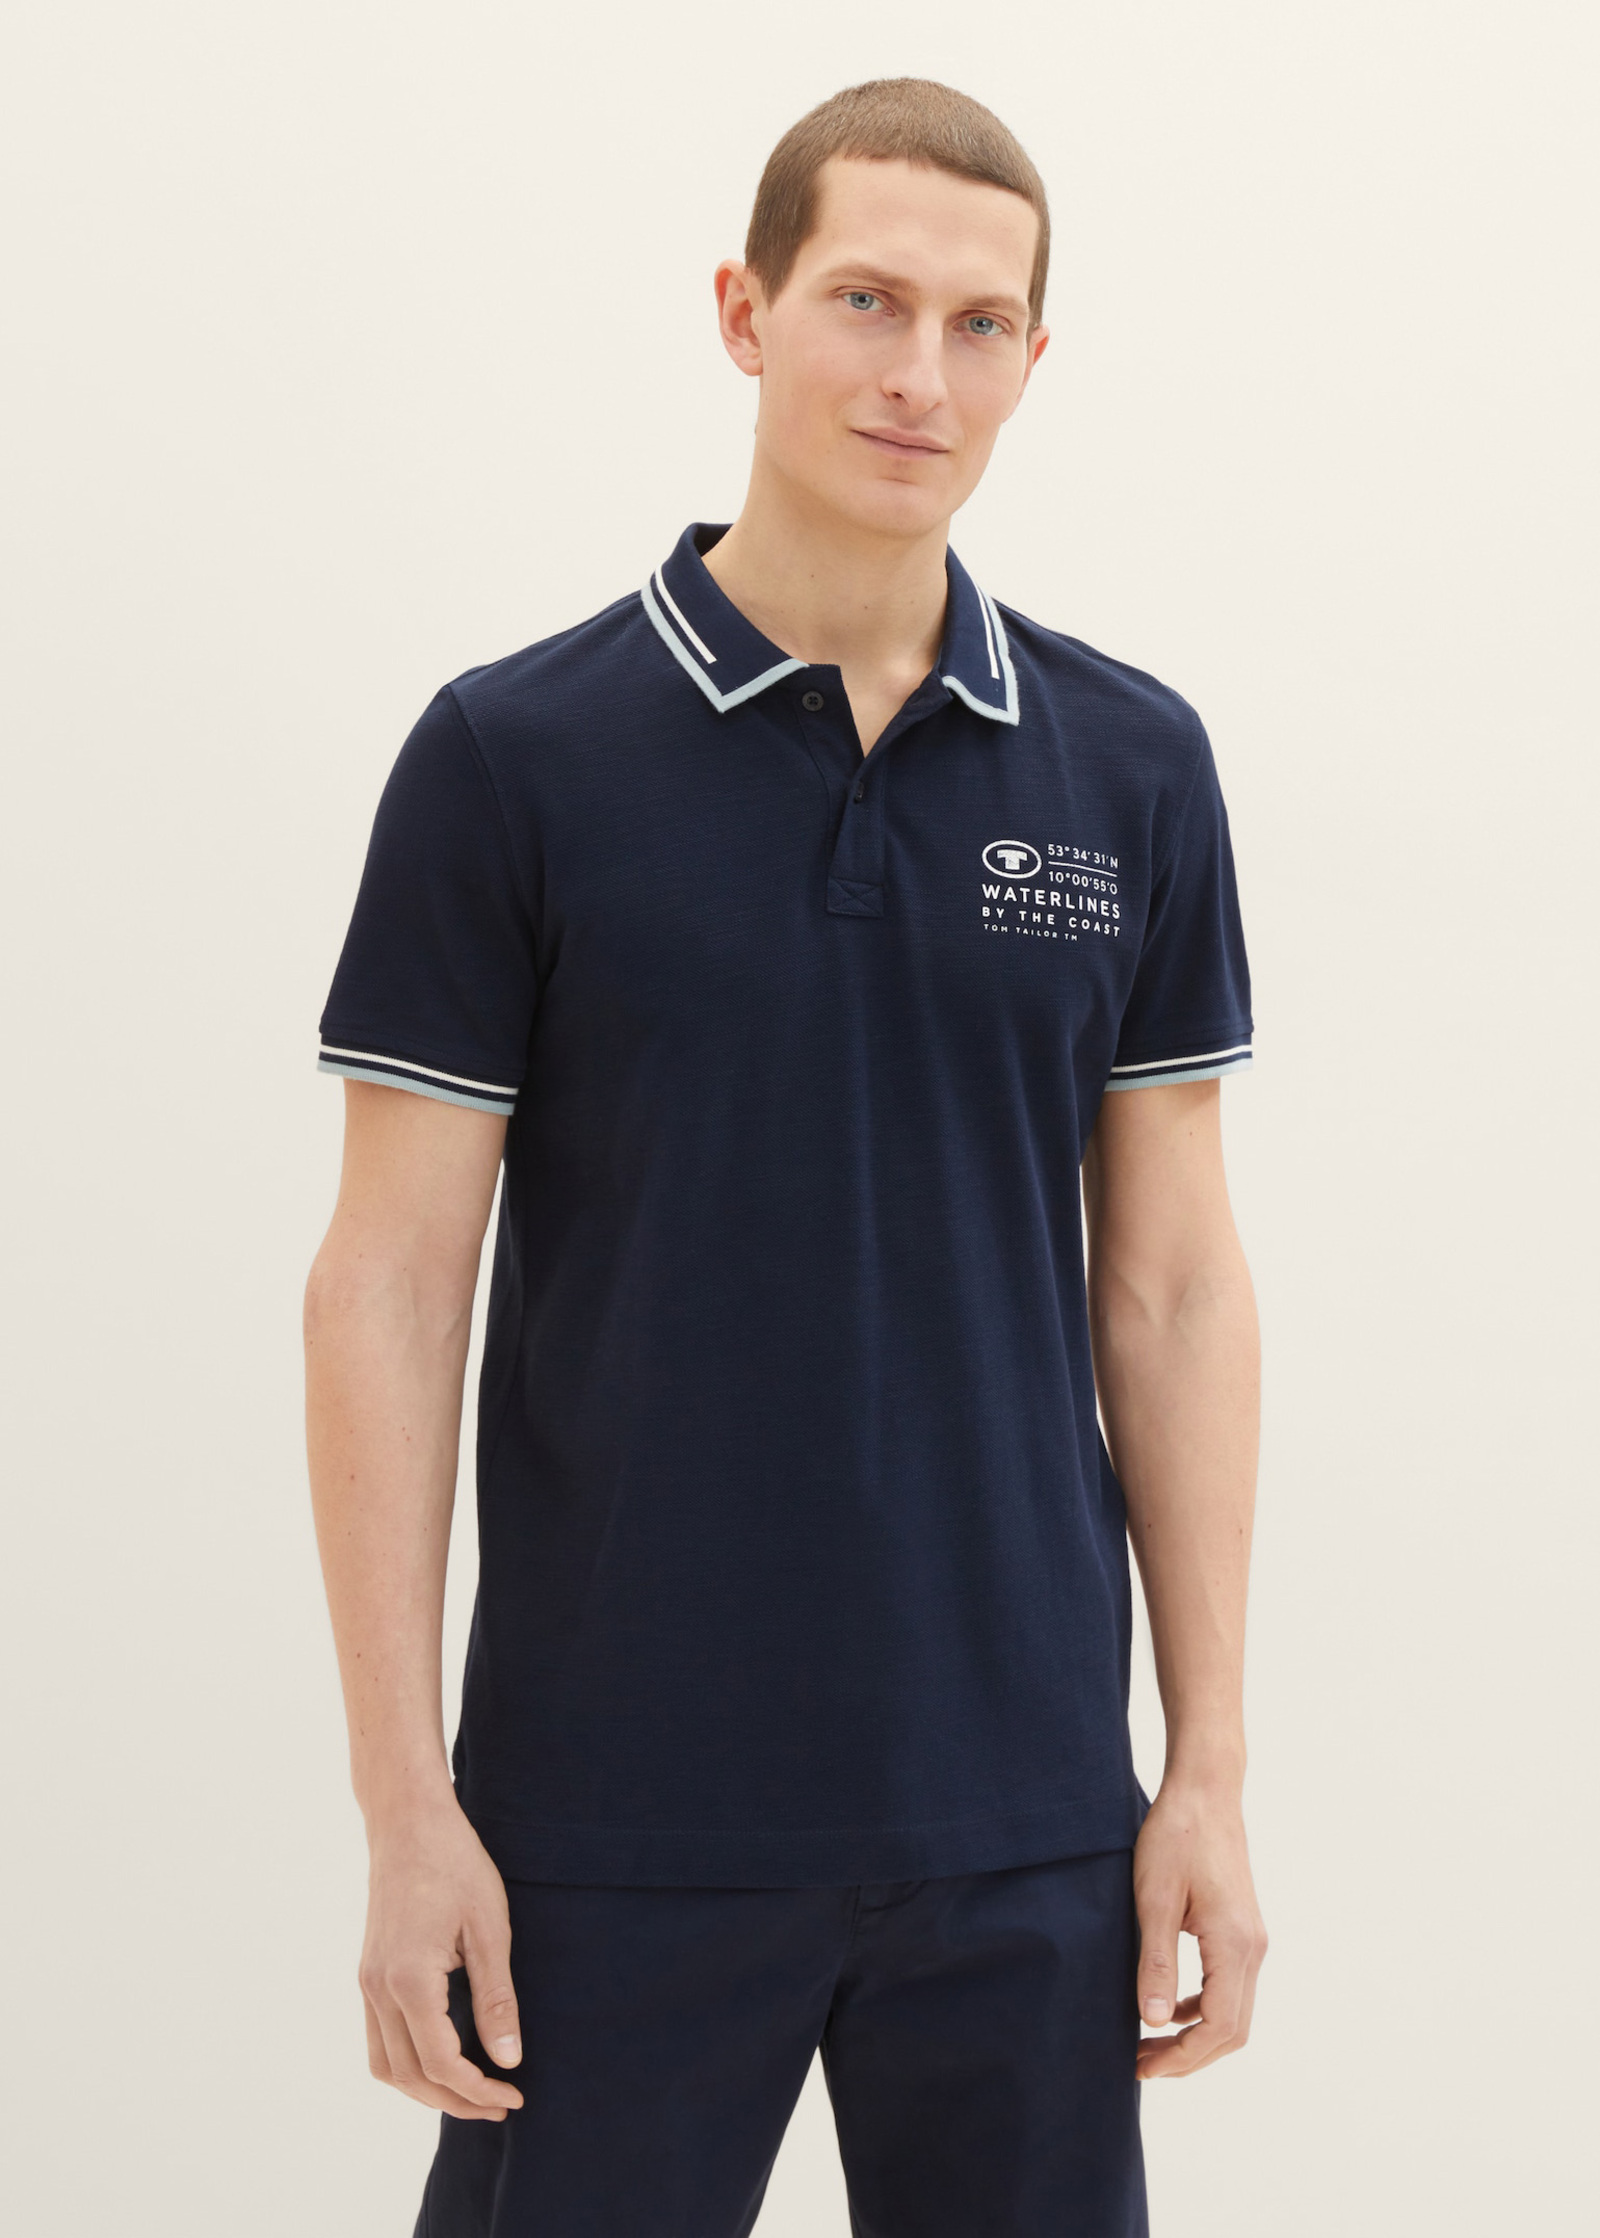 Tom Tailor® Polo embroidery with Größe - Captain Sky shirt L Blue logo